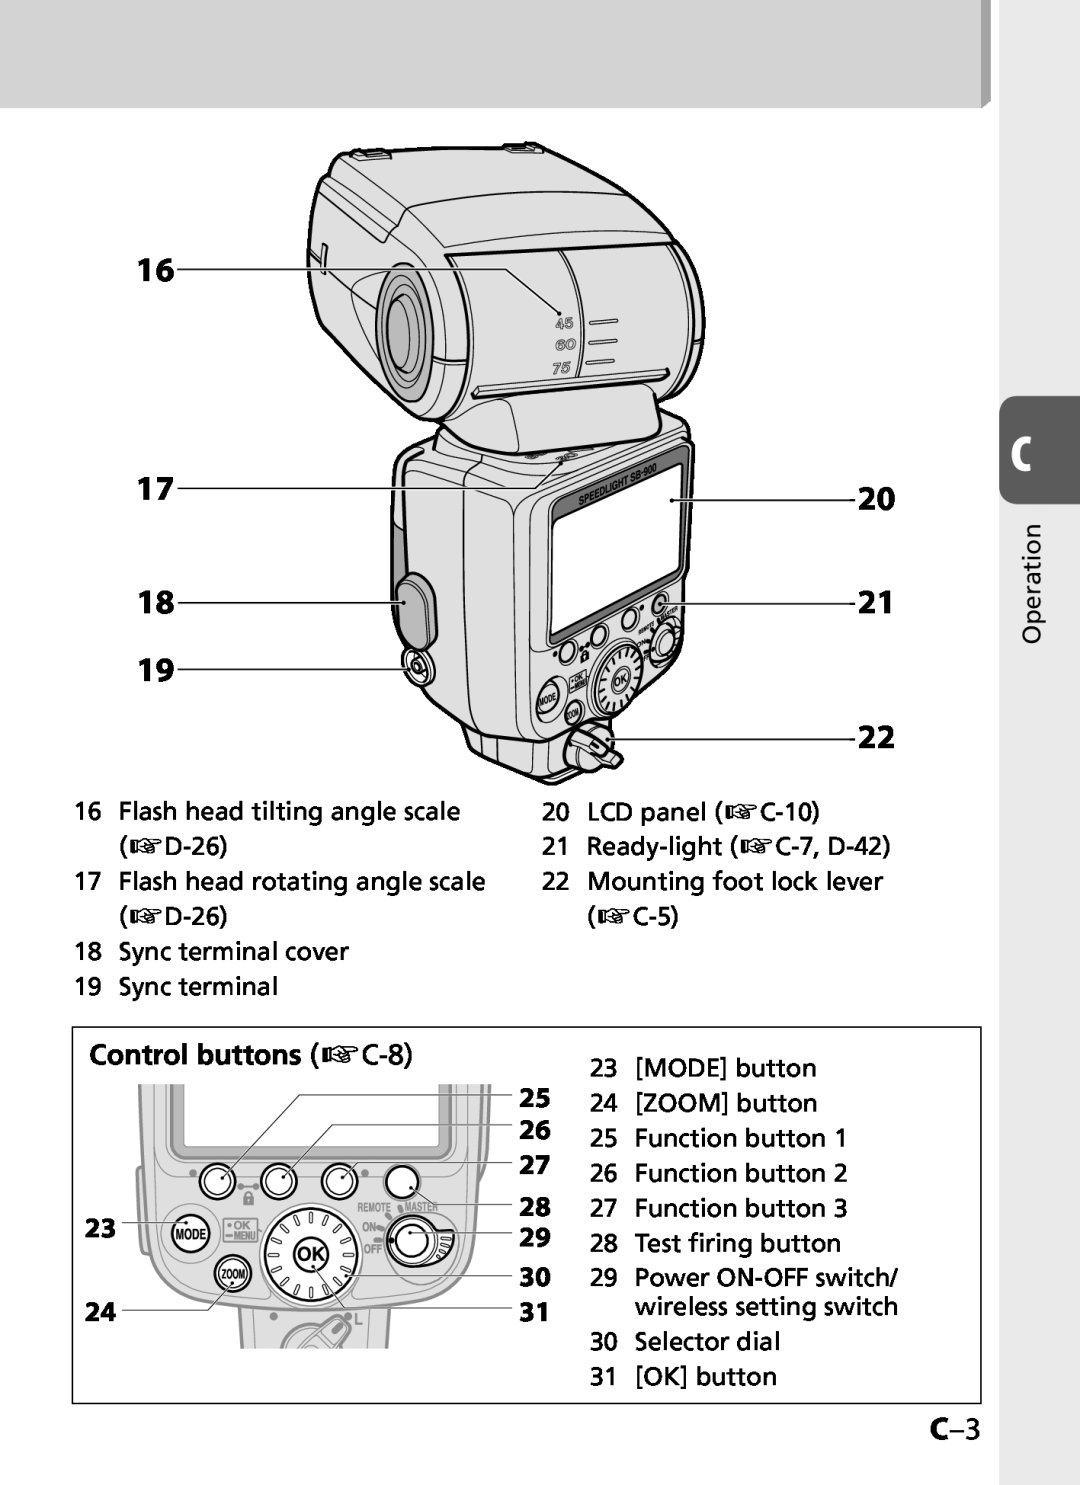 Univex SB-900 user manual 16 1720, Control buttons kC-8 23 24 